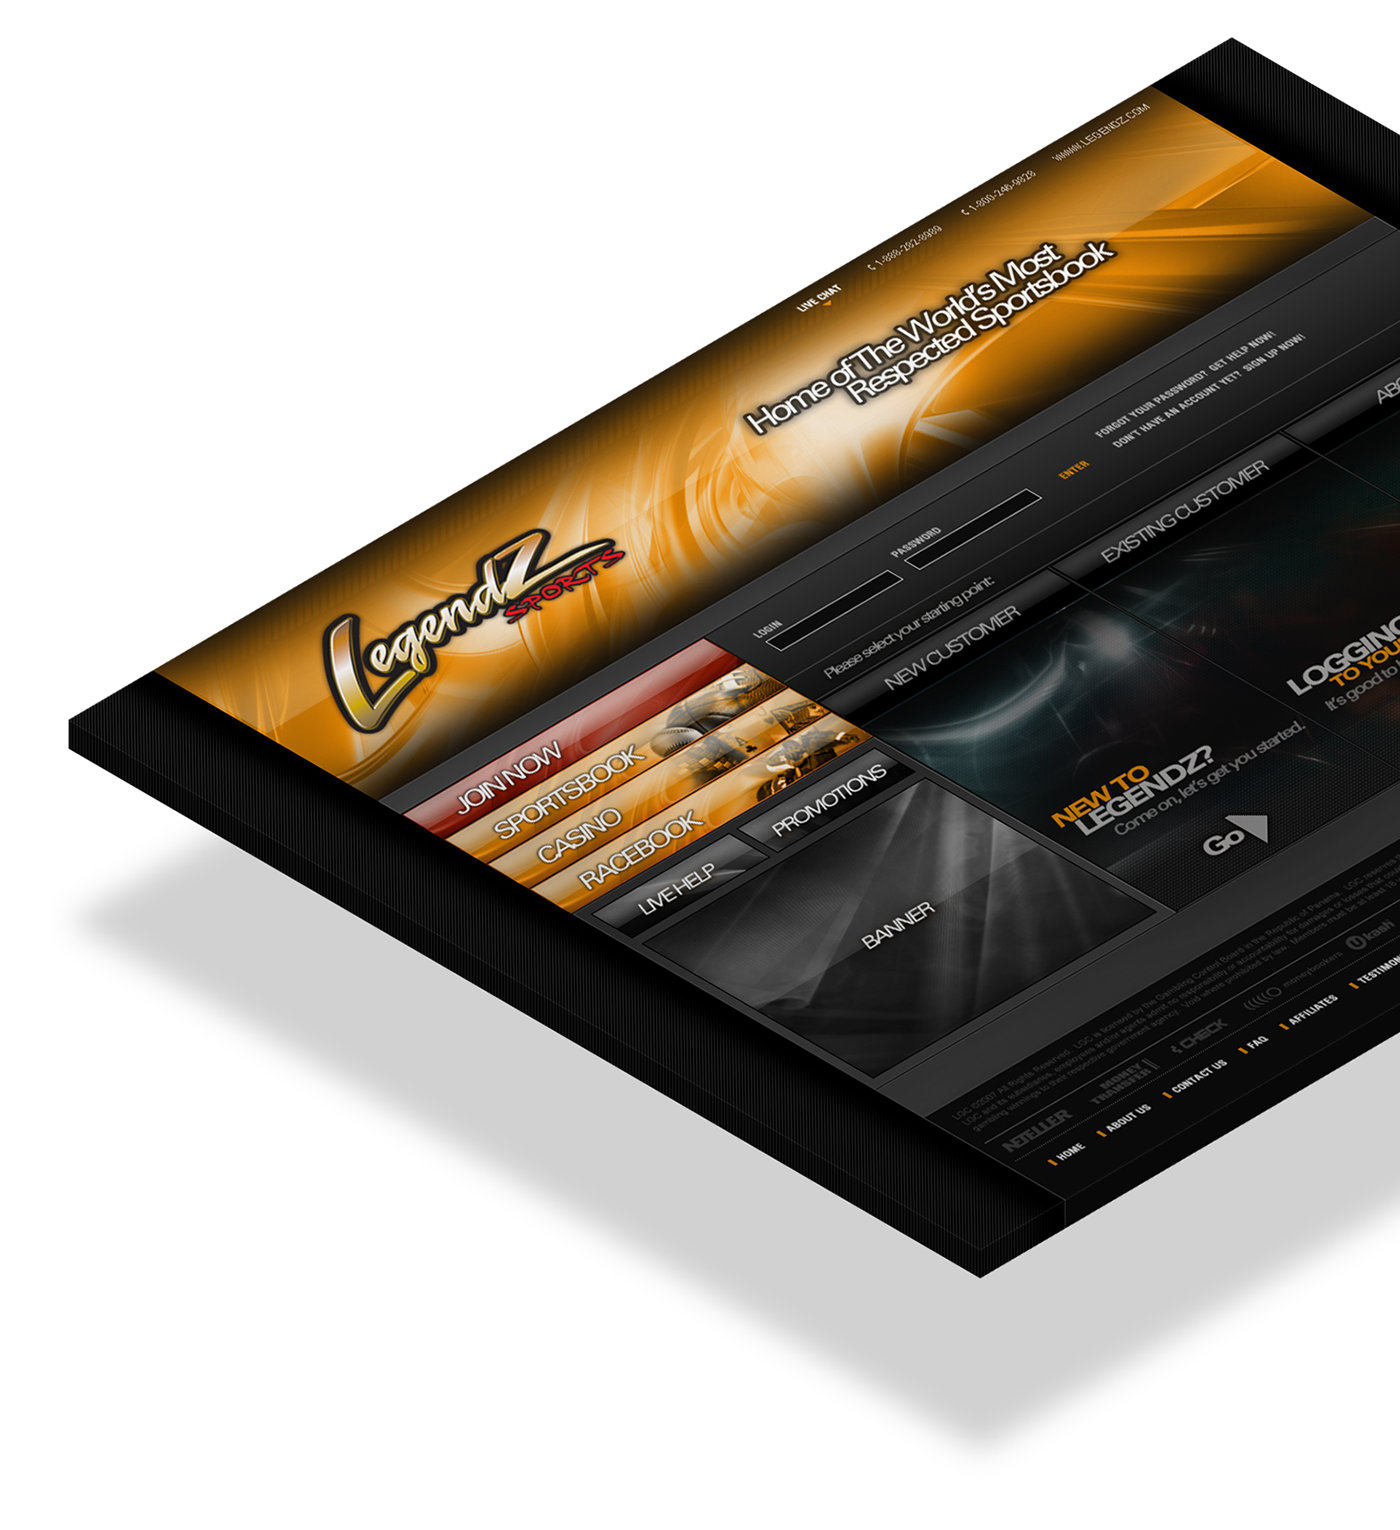 sportsbook gambling Website Web Design  website development Gaming